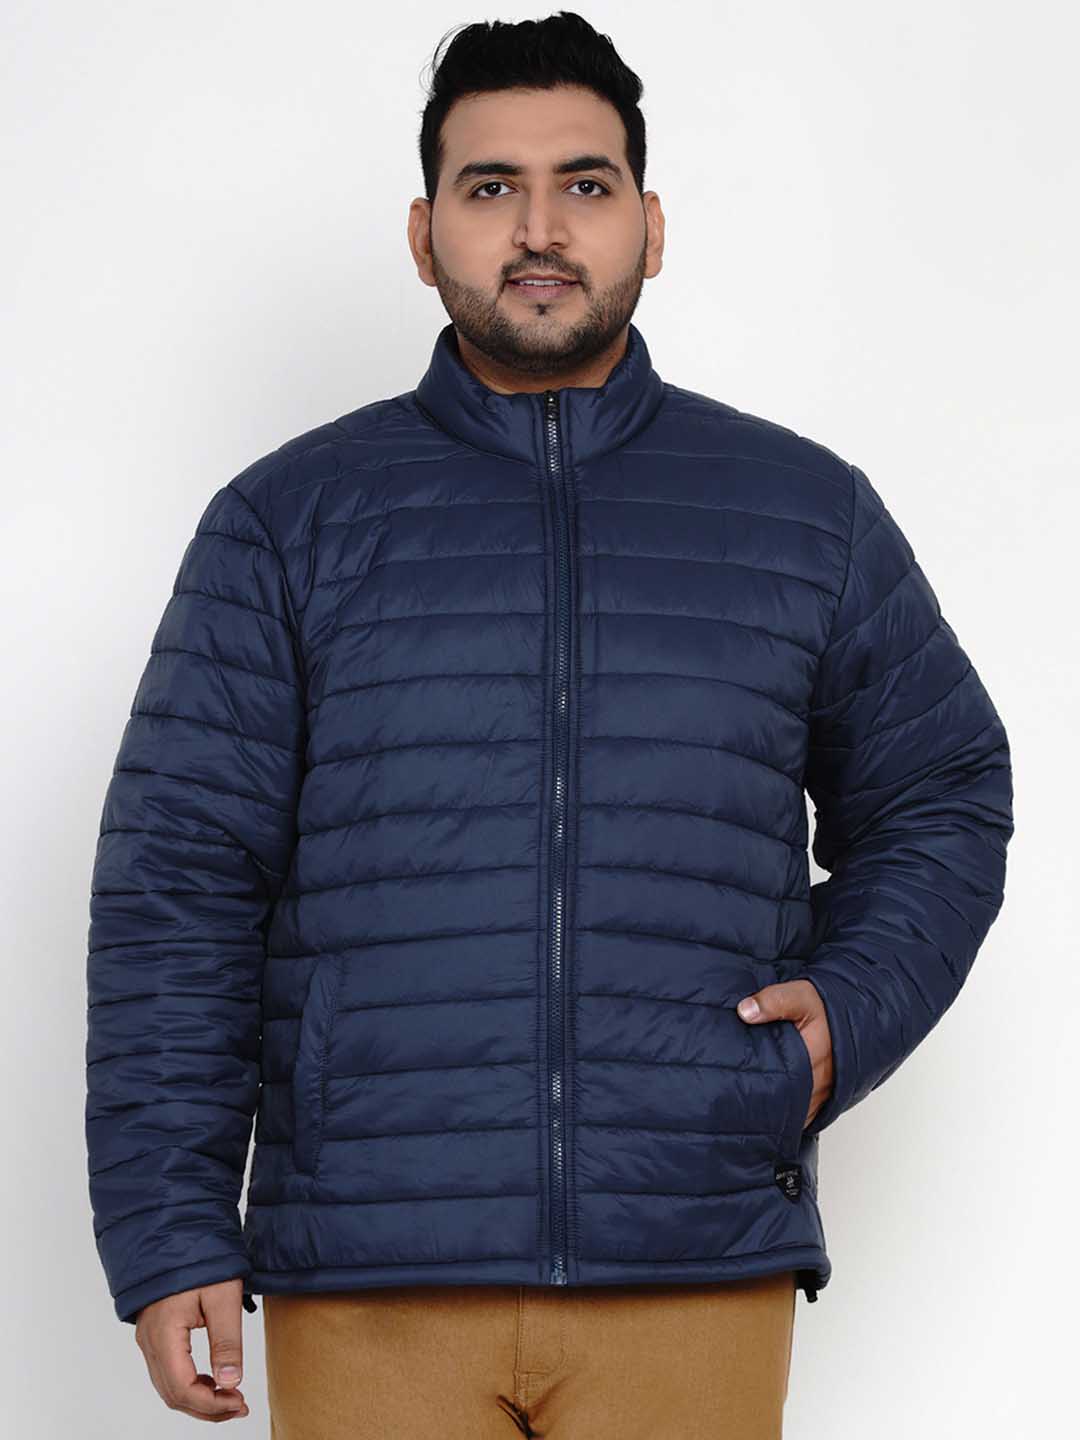 winterwear/jackets/JPJKT7385B/jpjkt7385b-3.jpg